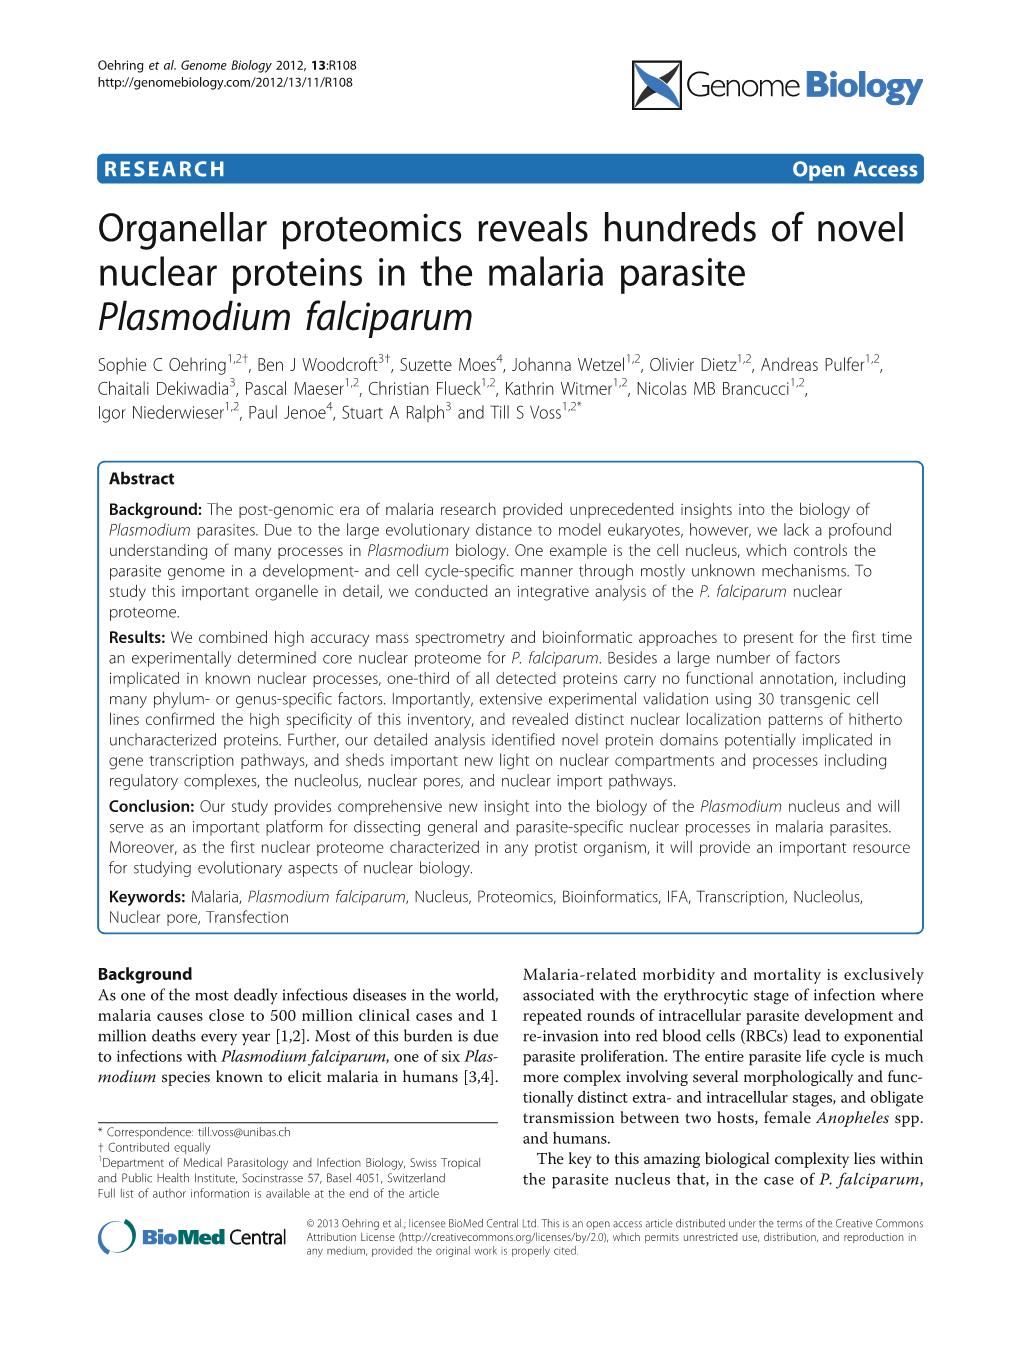 Organellar Proteomics Reveals Hundreds of Novel Nuclear Proteins in the Malaria Parasite Plasmodium Falciparum